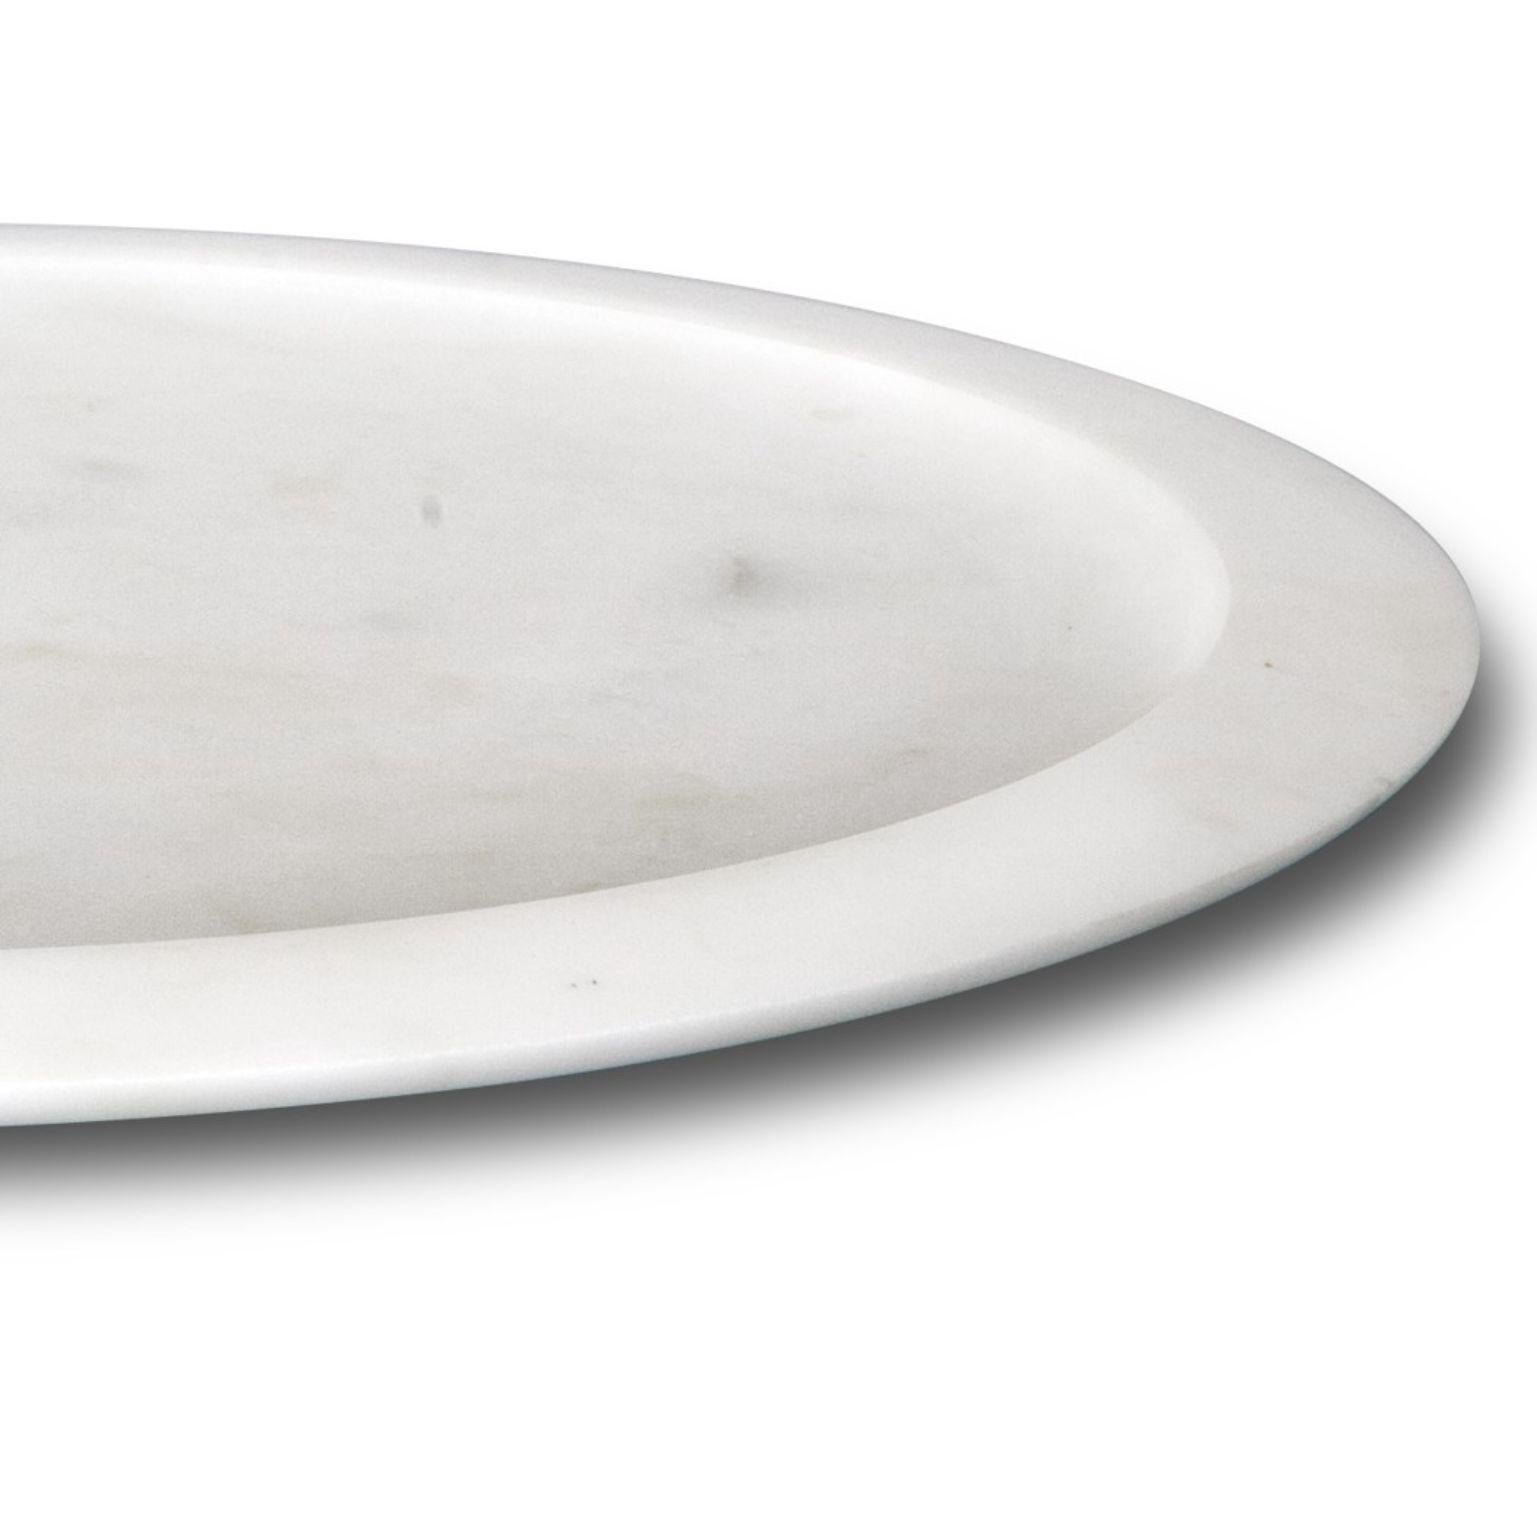 Italian Nysiros Serving Plate, White by Ivan Colominas